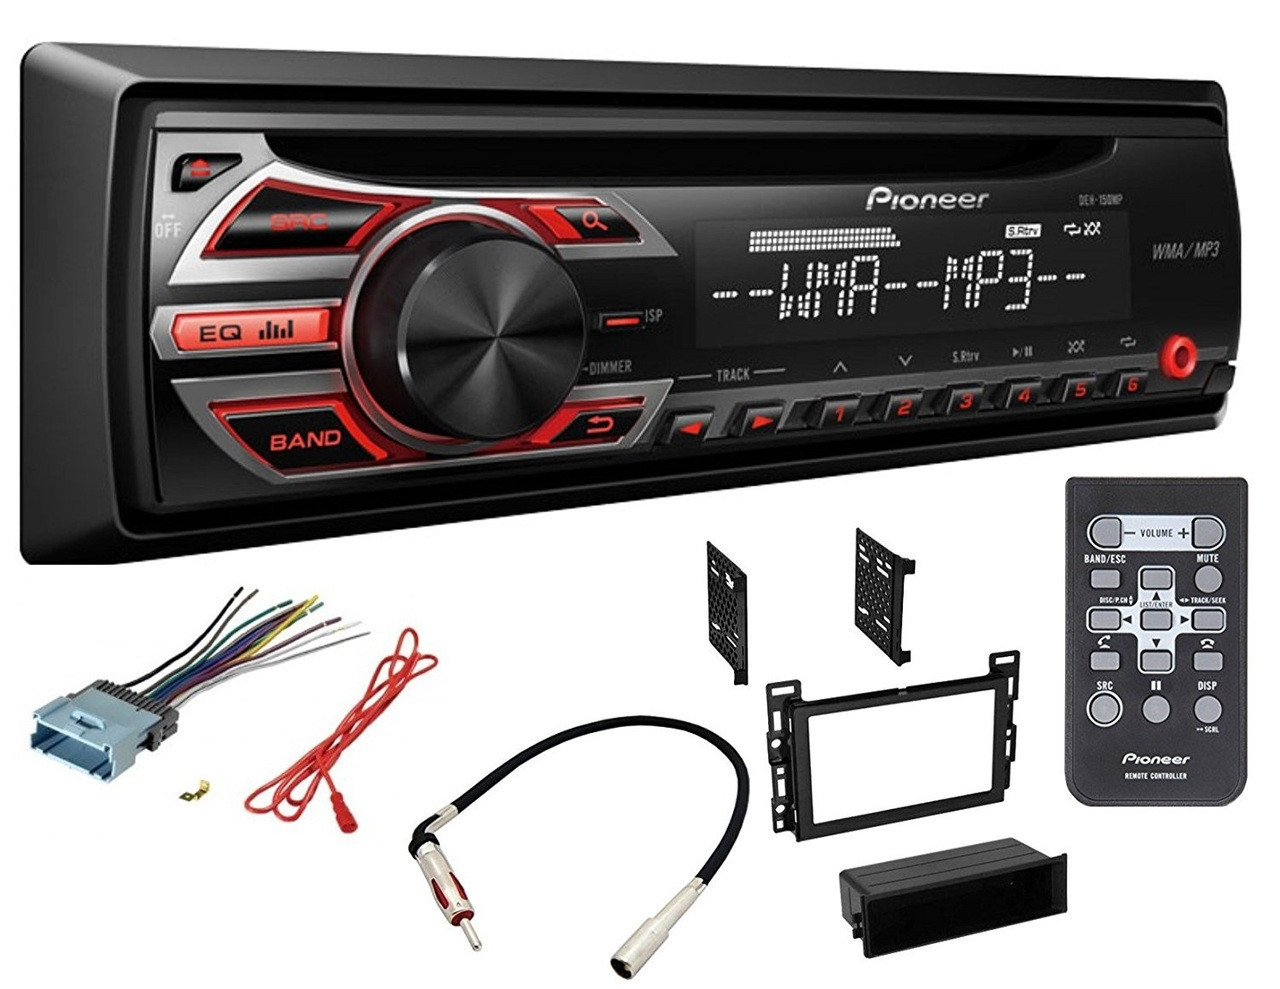 Pioneer CD Player Car Stereo Radio Install Dash Kit Wiring Harness Antenna